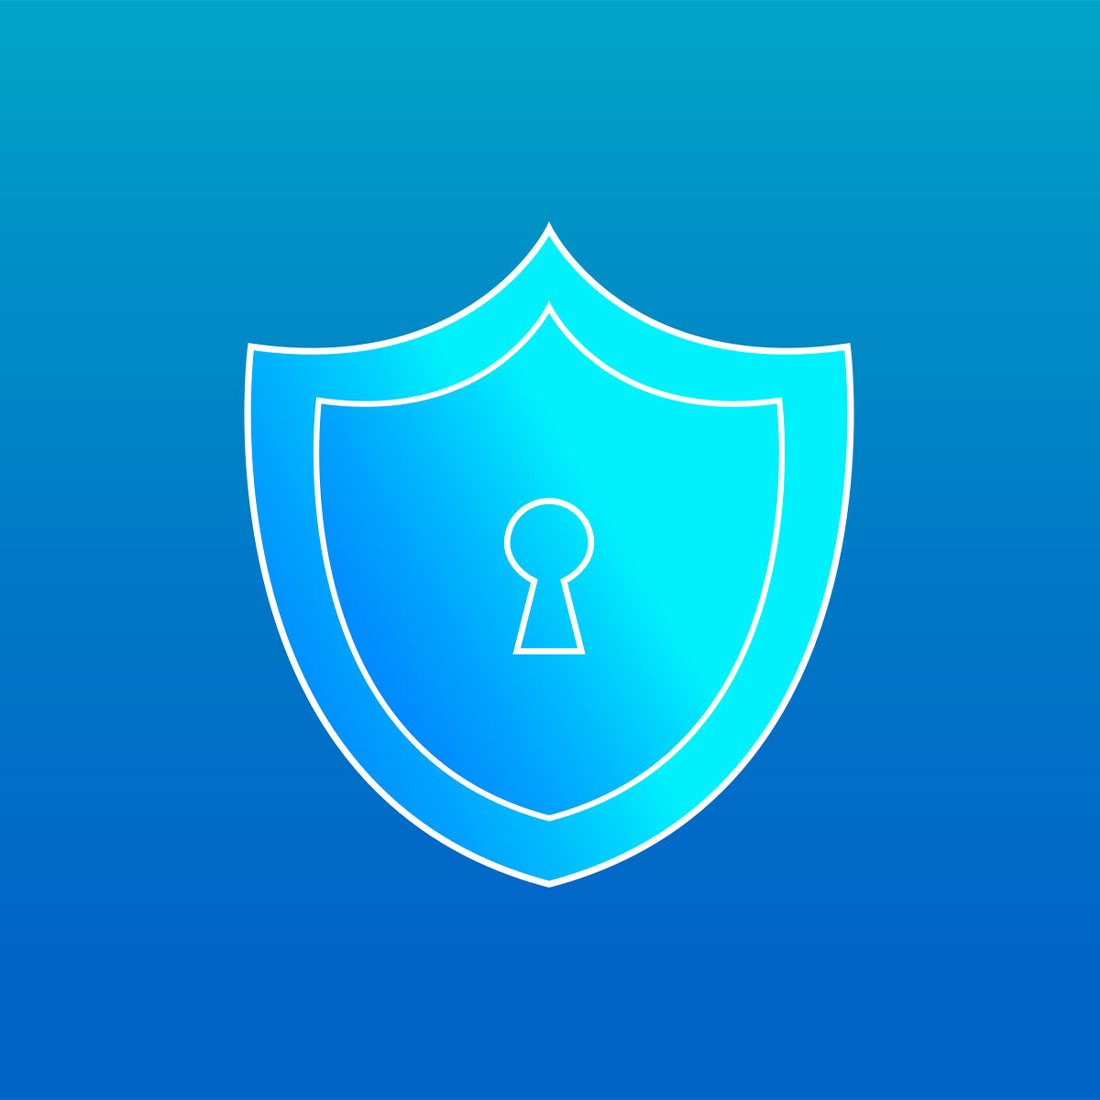 Shield Security Emblem Gradient Vector Logo cover image.